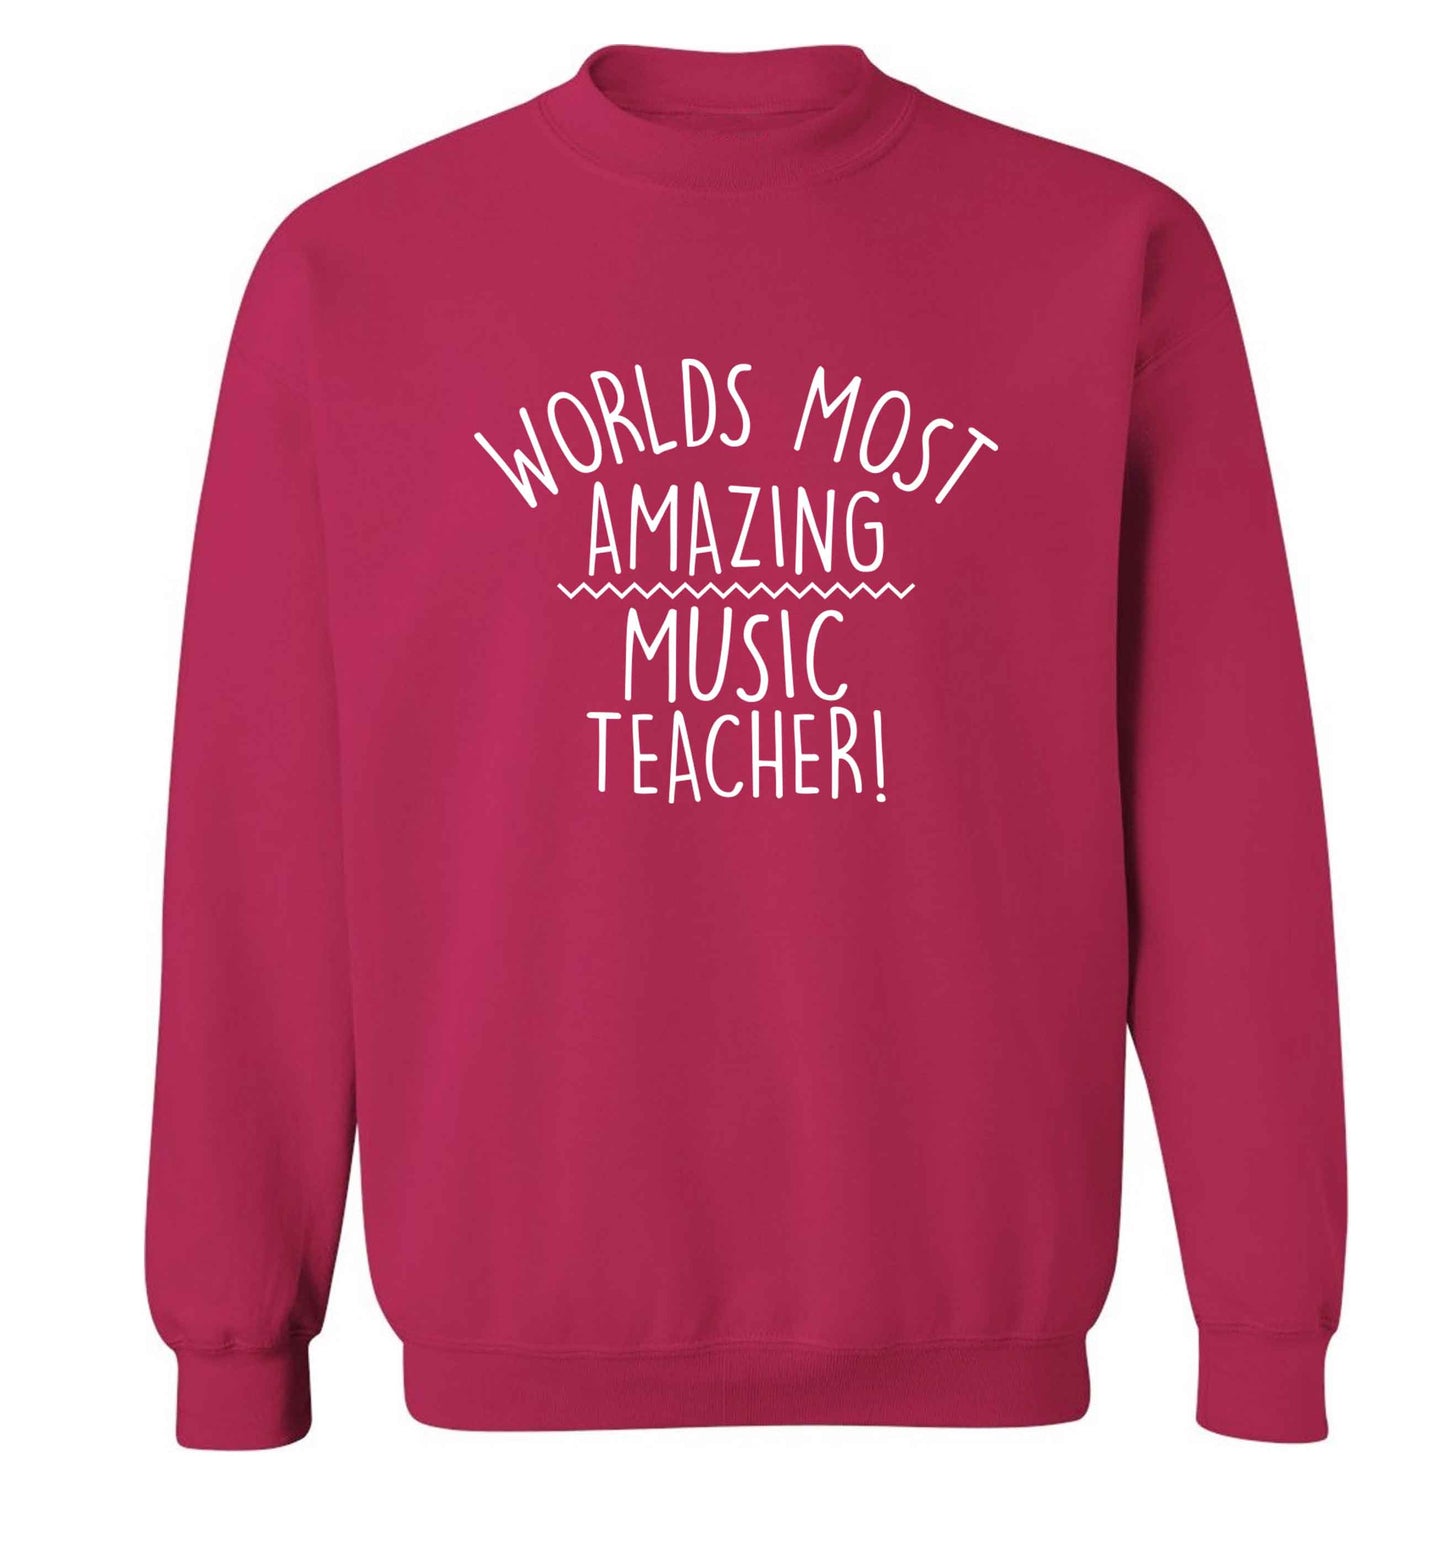 Worlds most amazing music teacher adult's unisex pink sweater 2XL